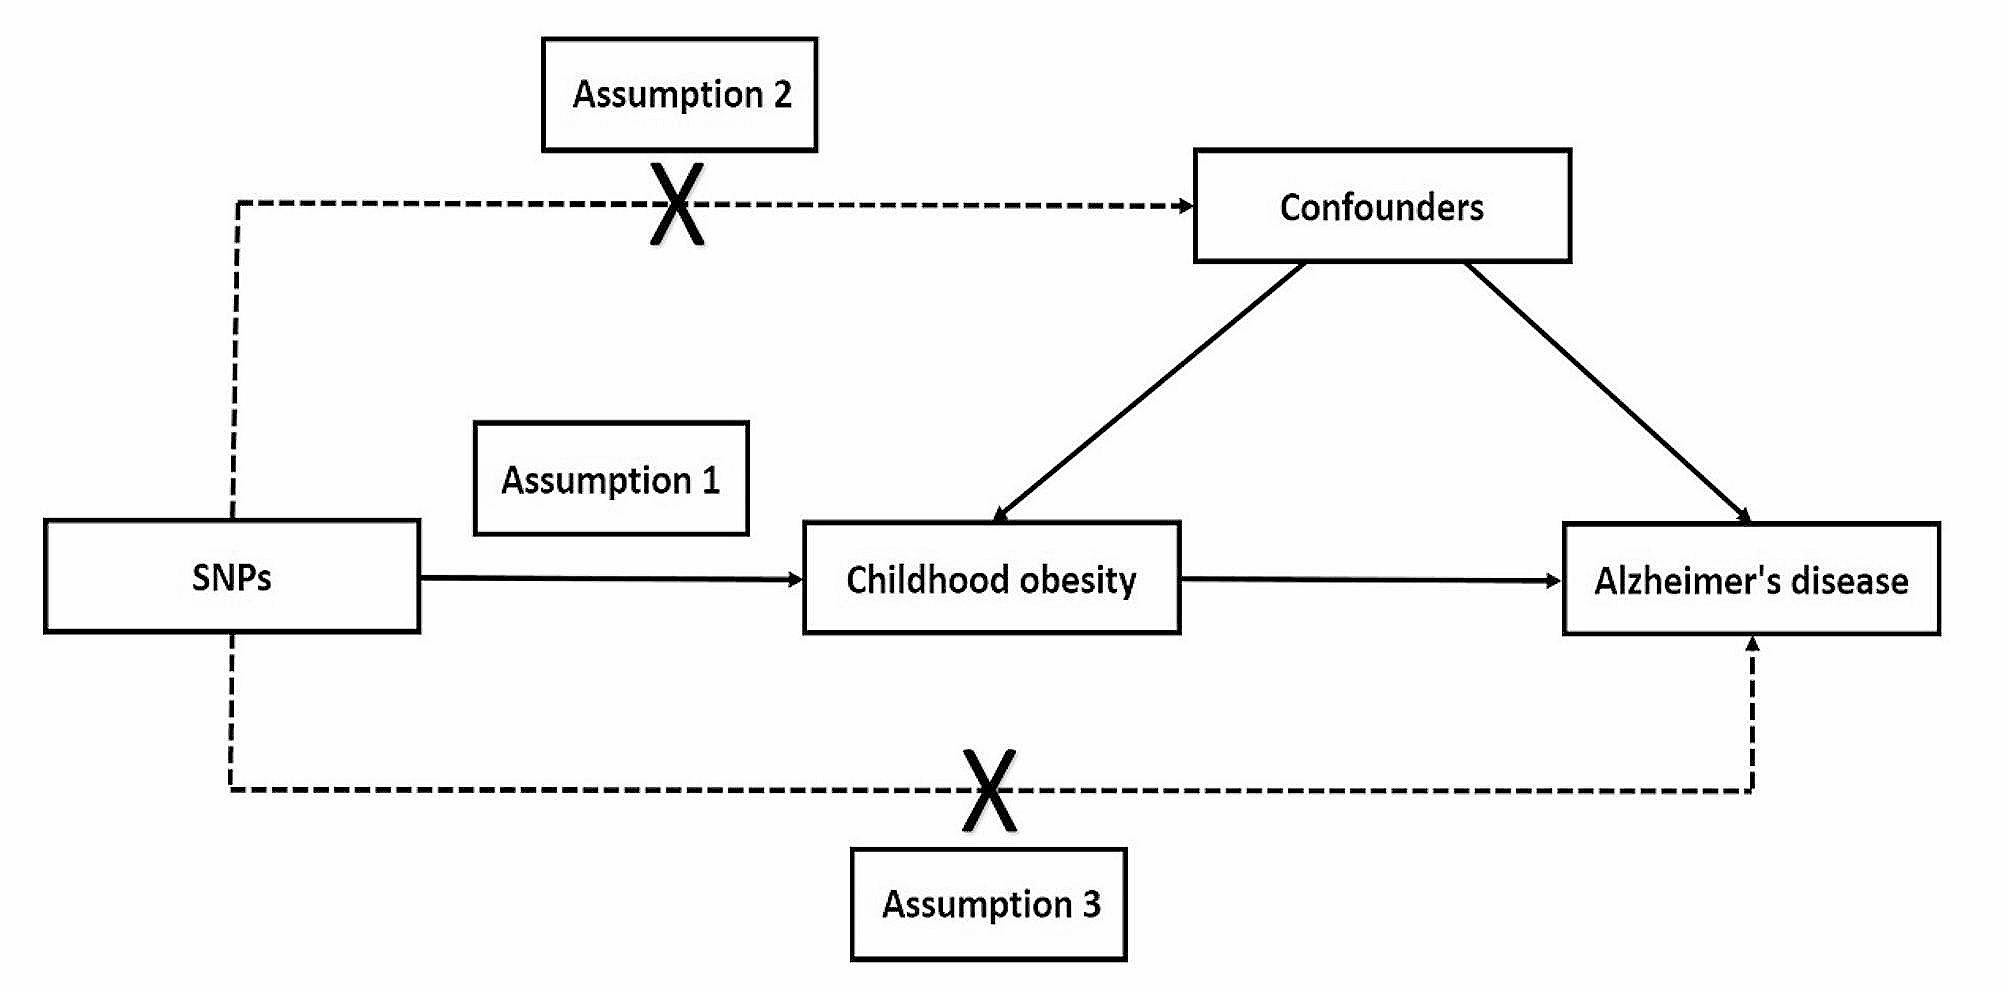 Childhood obesity and risk of Alzheimer’s disease: a Mendelian randomization study